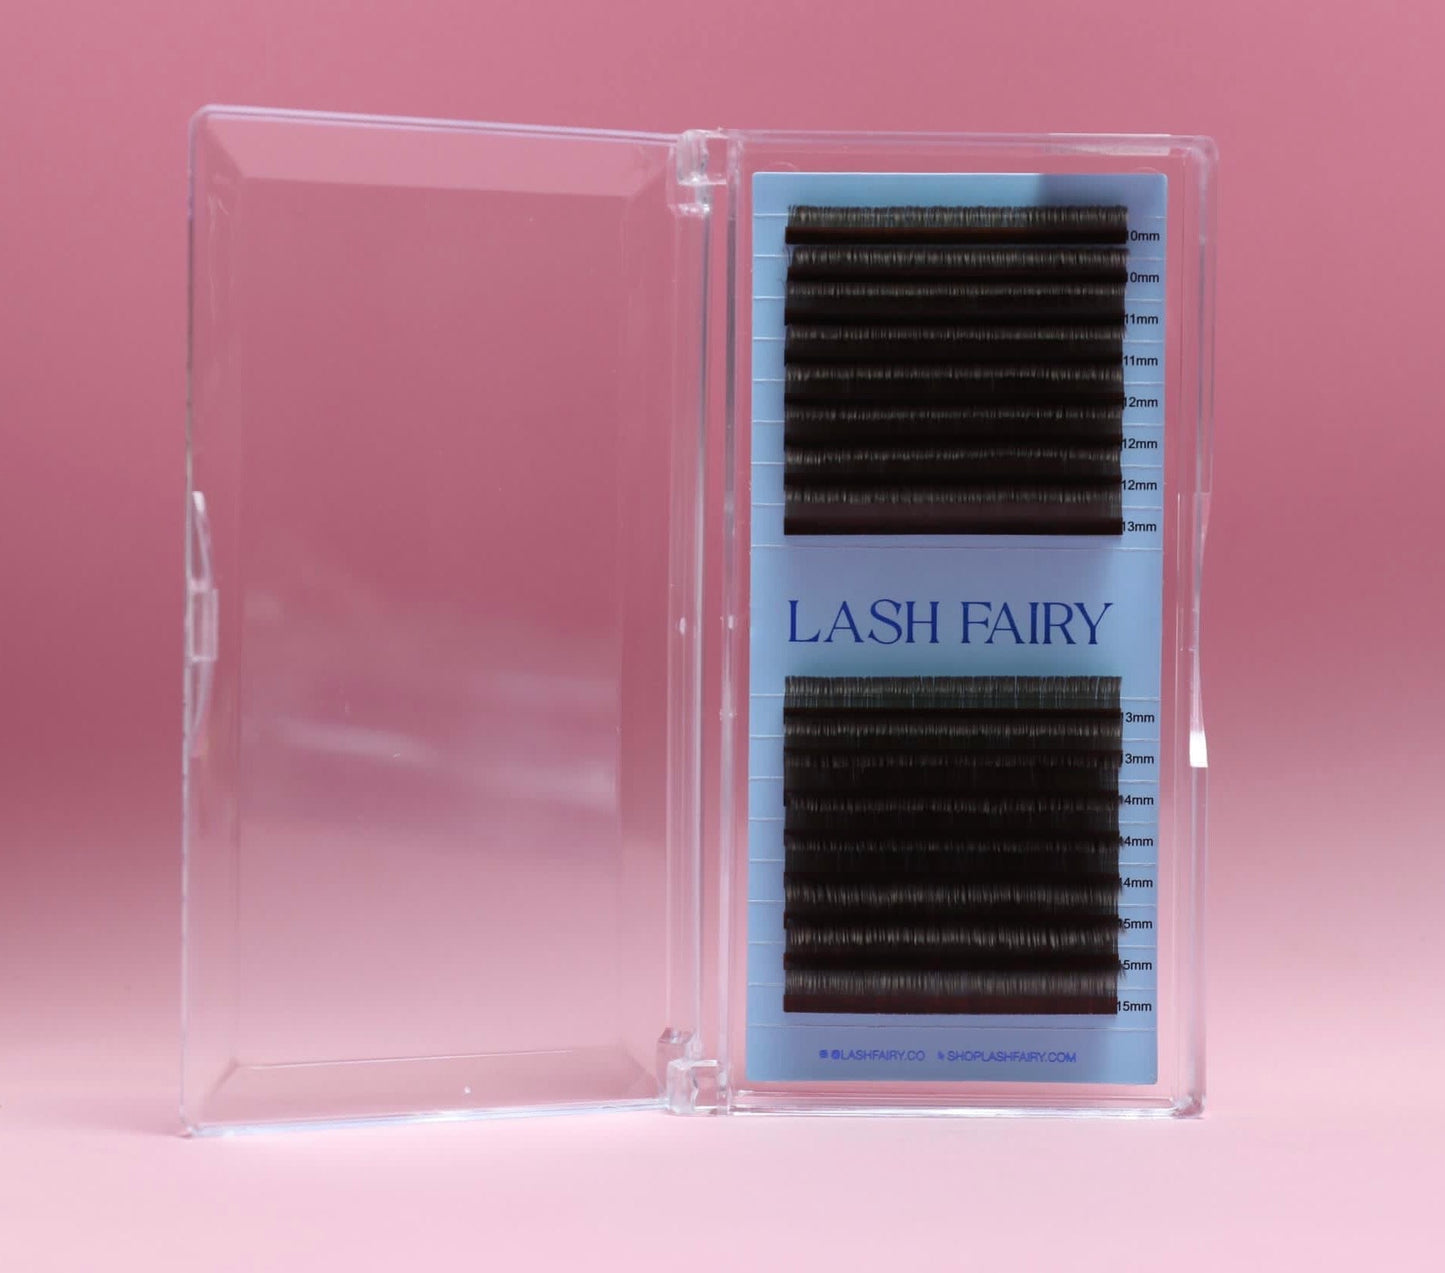 Brown Lashes (single legth) trays